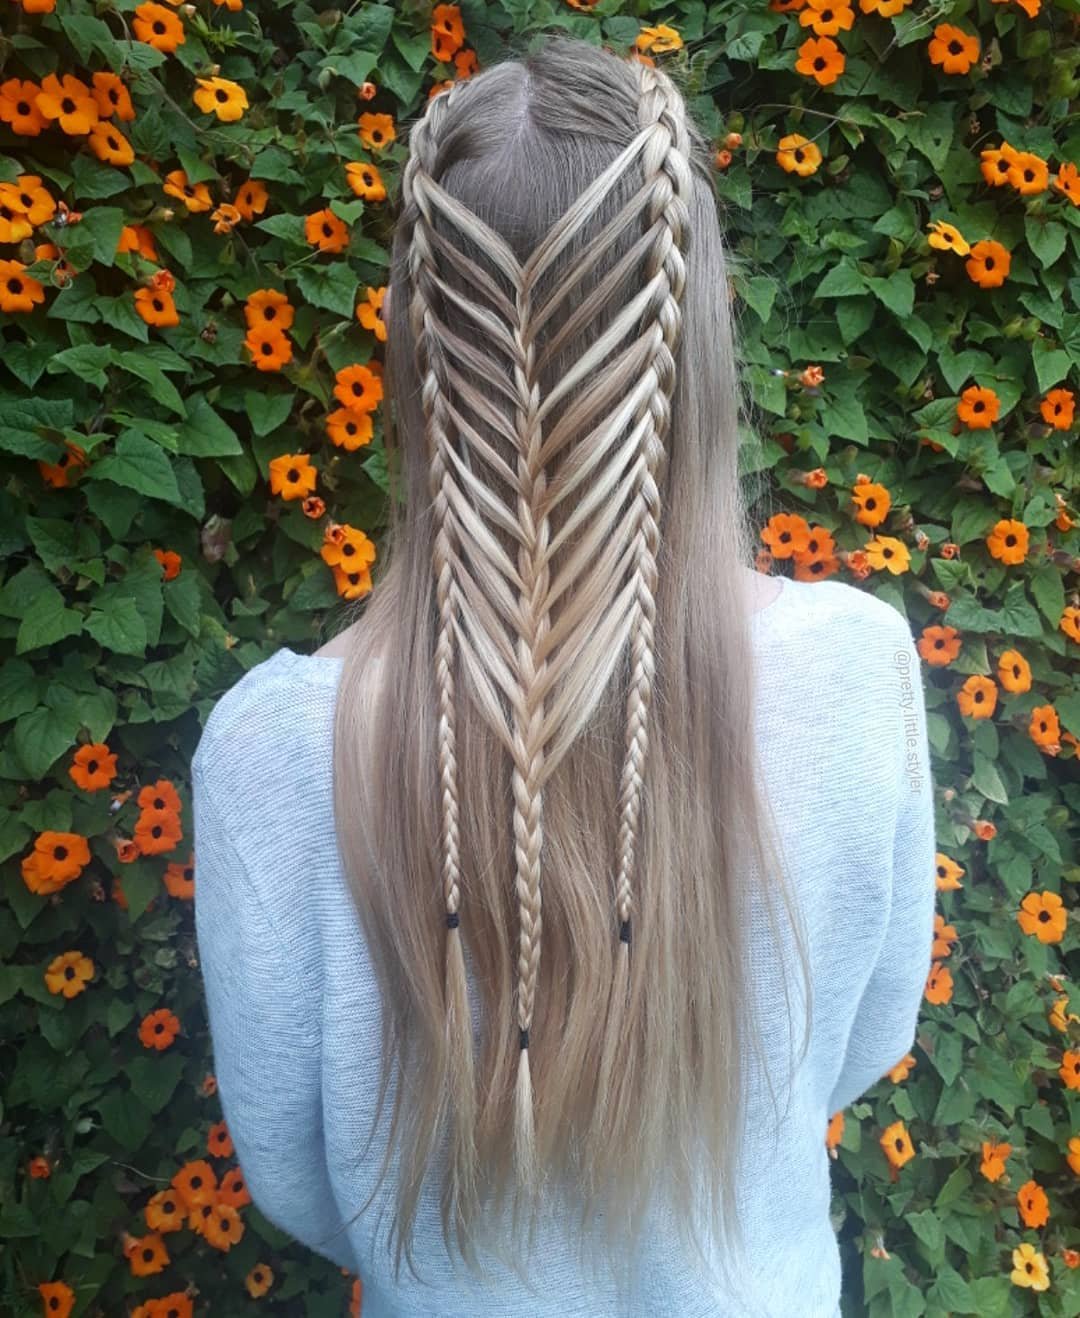 Feather braids